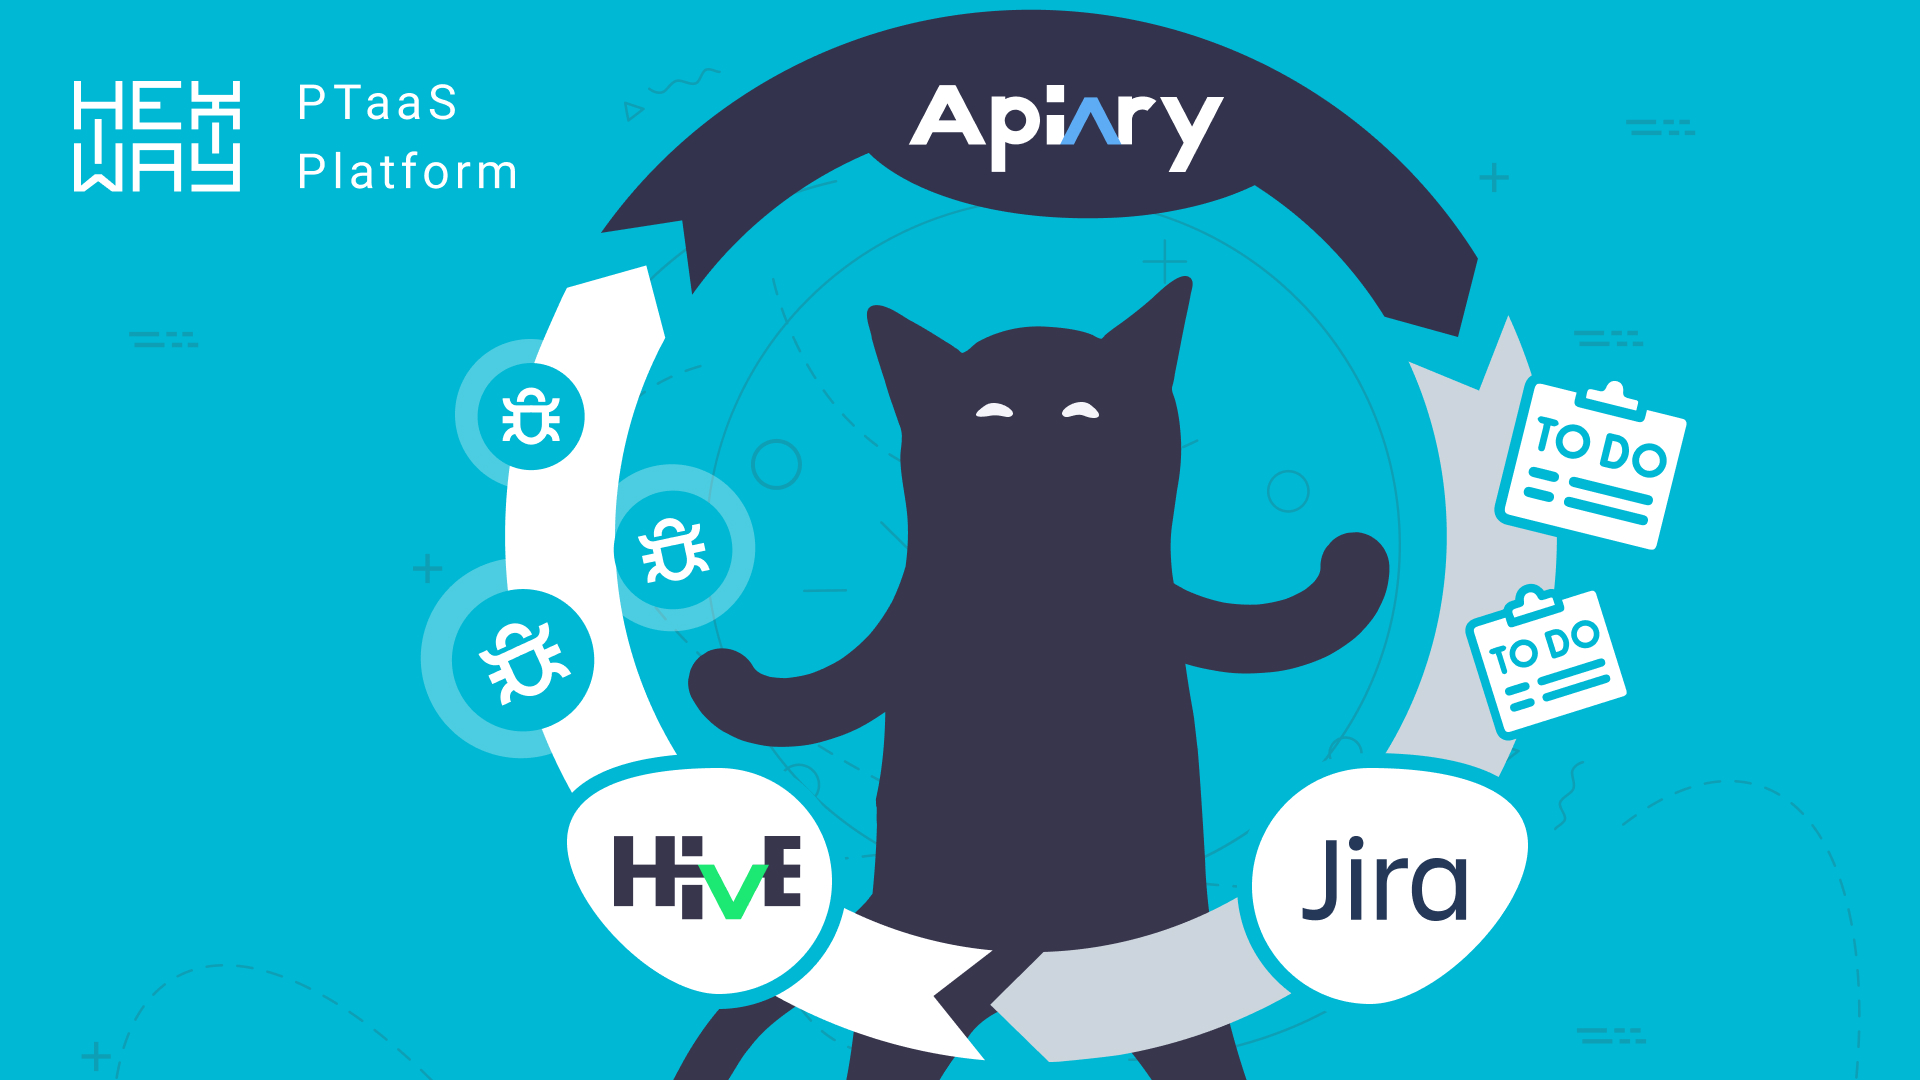 Hive-Apiary-Jira cycle